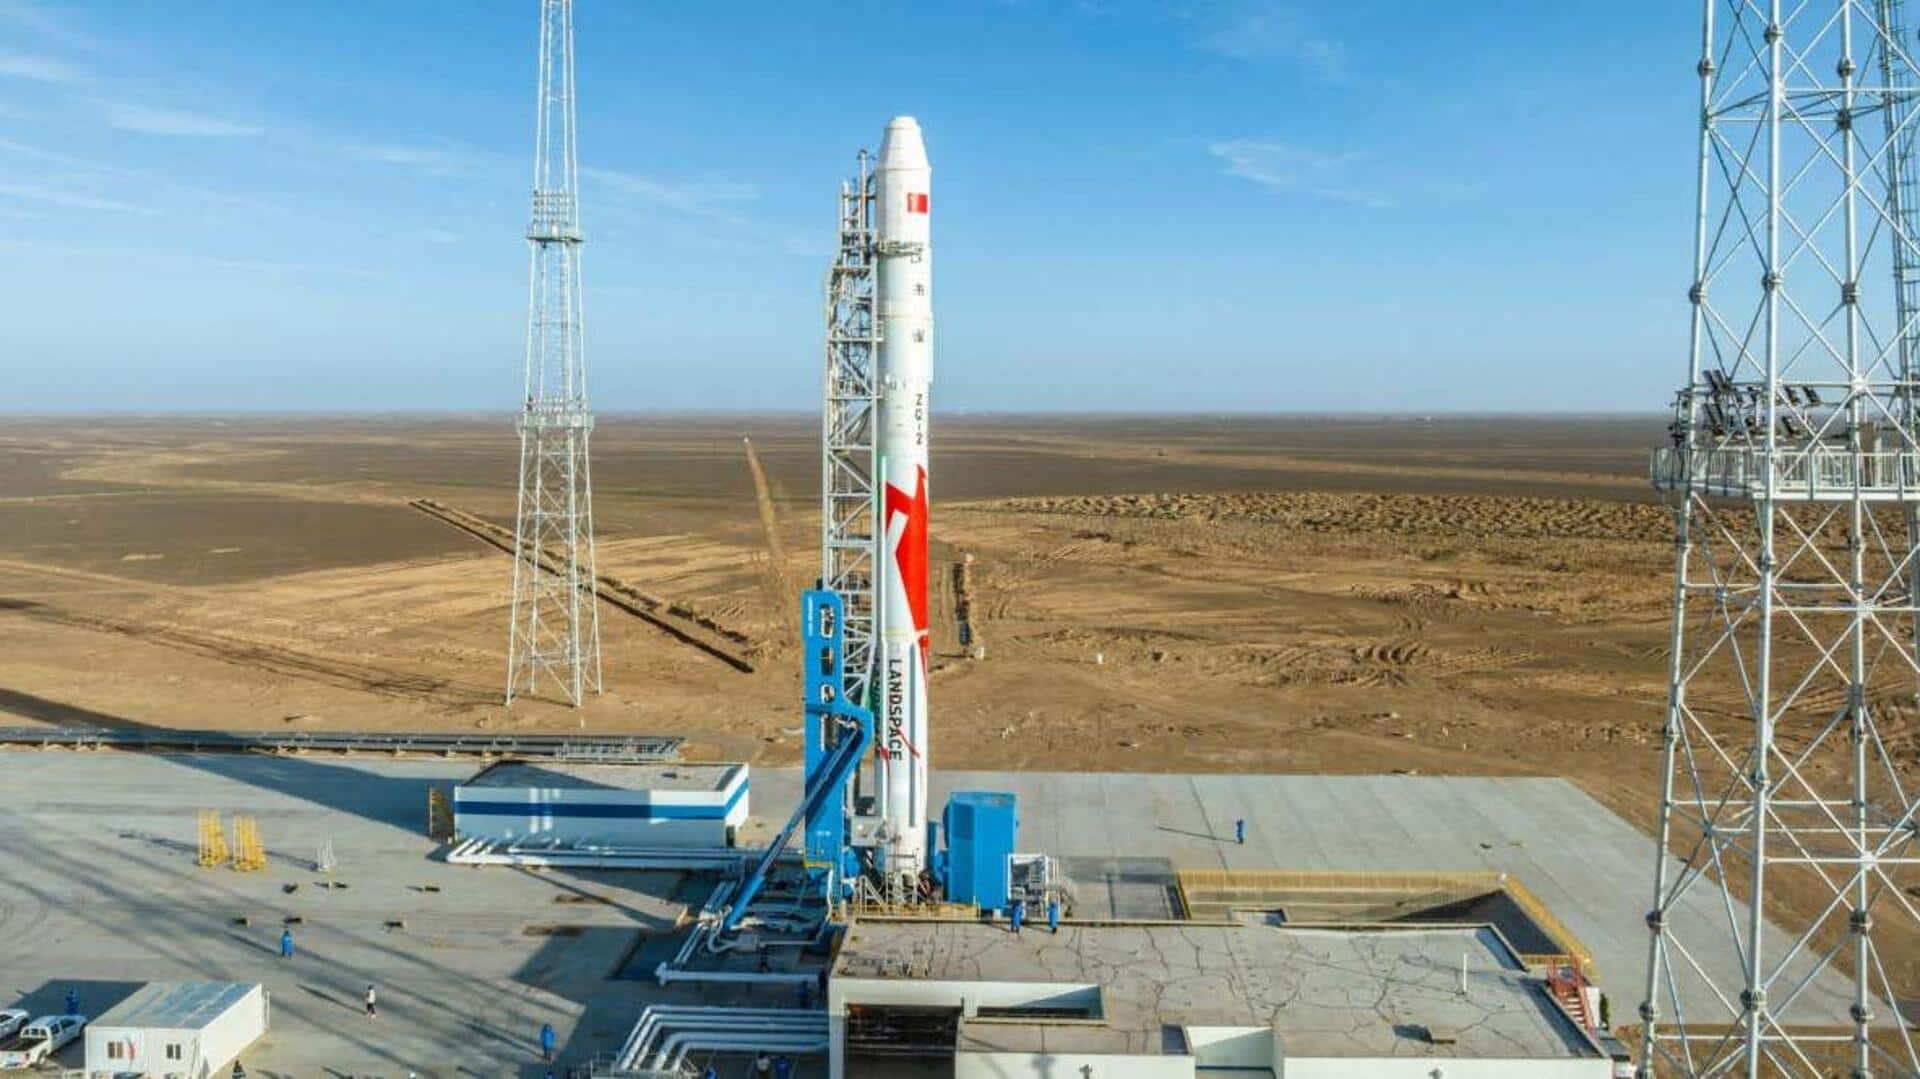 China's methane-powered rocket aims to make historic orbit journey